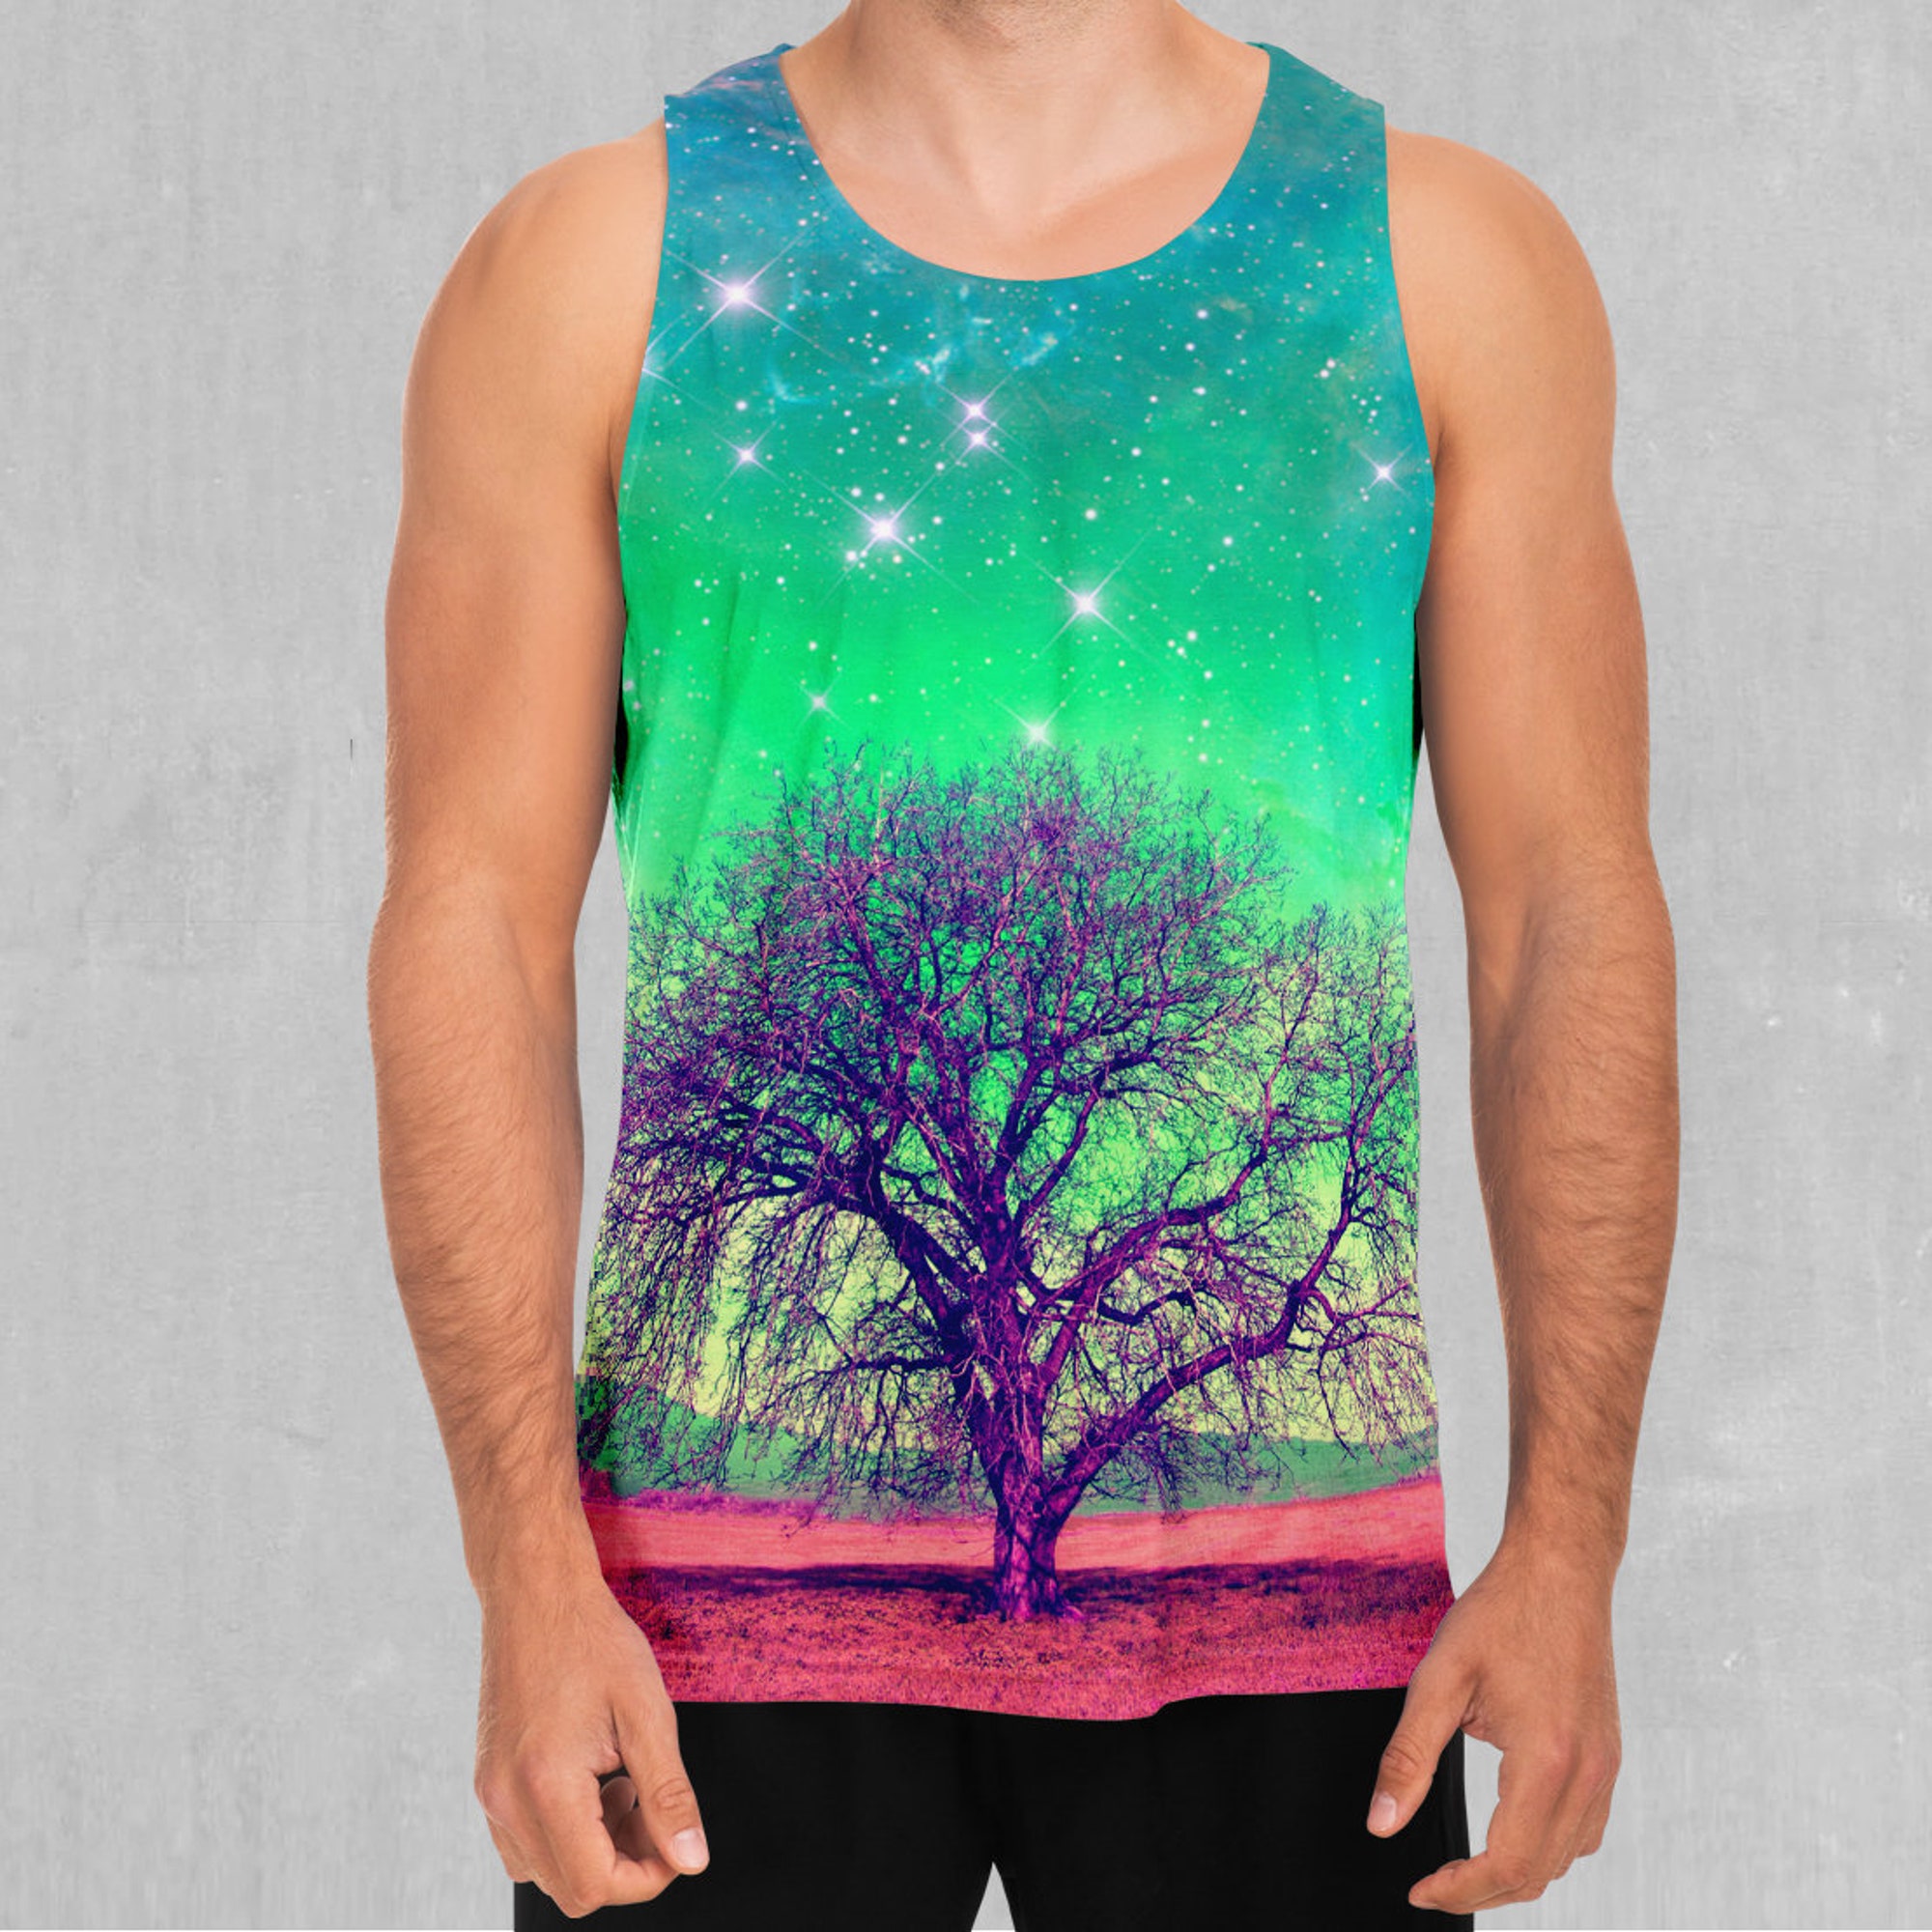 Galactic Essence Galaxy Tree of Life Men's Tank Top Muscle Sleeveless Shirt